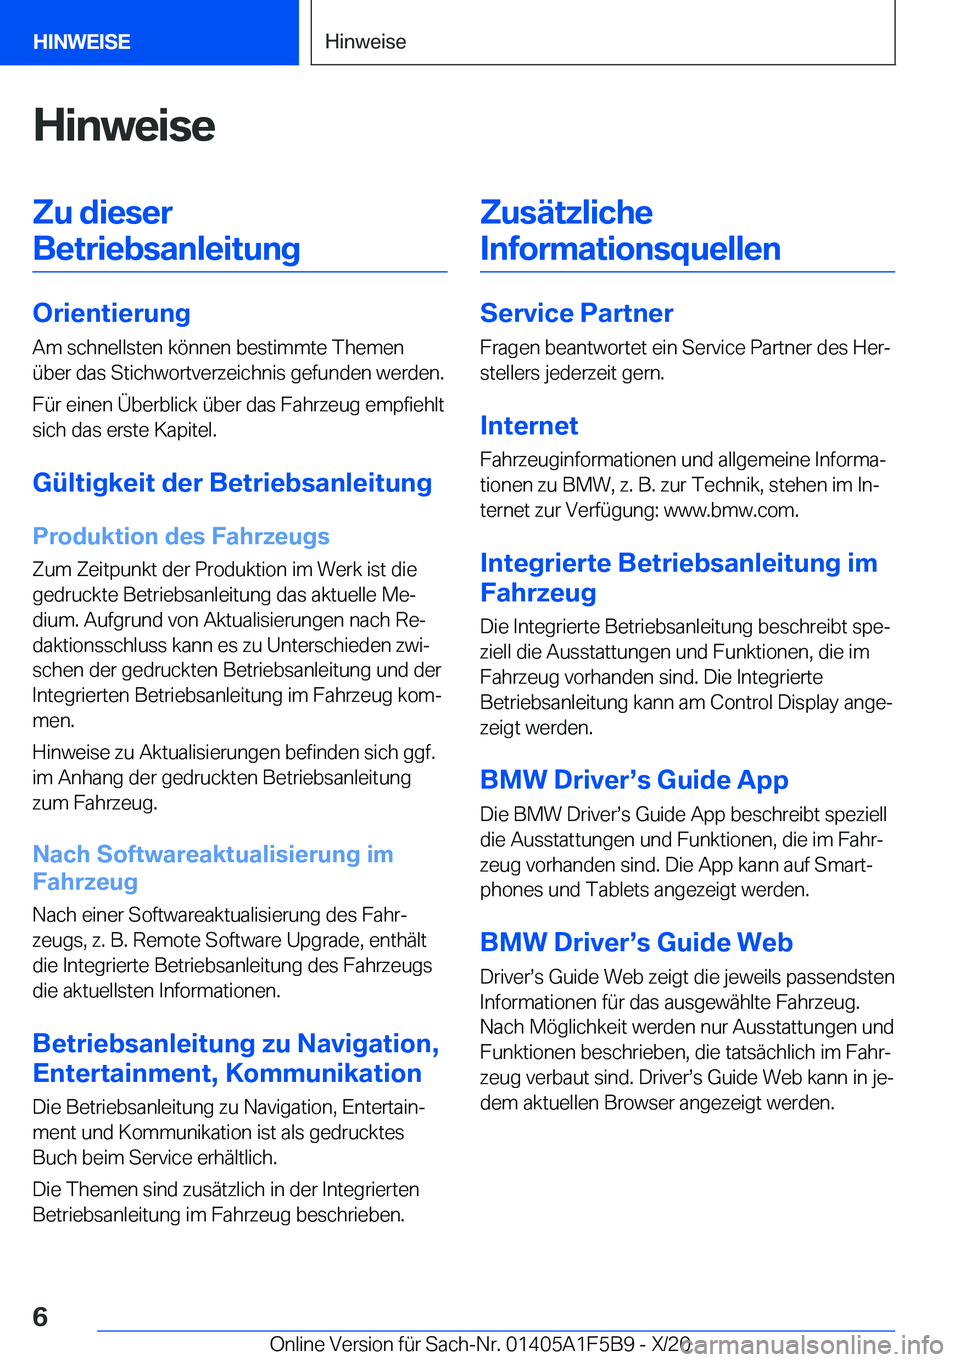 BMW X4 M 2021  Betriebsanleitungen (in German) �H�i�n�w�e�i�s�e�Z�u��d�i�e�s�e�r�B�e�t�r�i�e�b�s�a�n�l�e�i�t�u�n�g
�O�r�i�e�n�t�i�e�r�u�n�g �A�m��s�c�h�n�e�l�l�s�t�e�n��k�